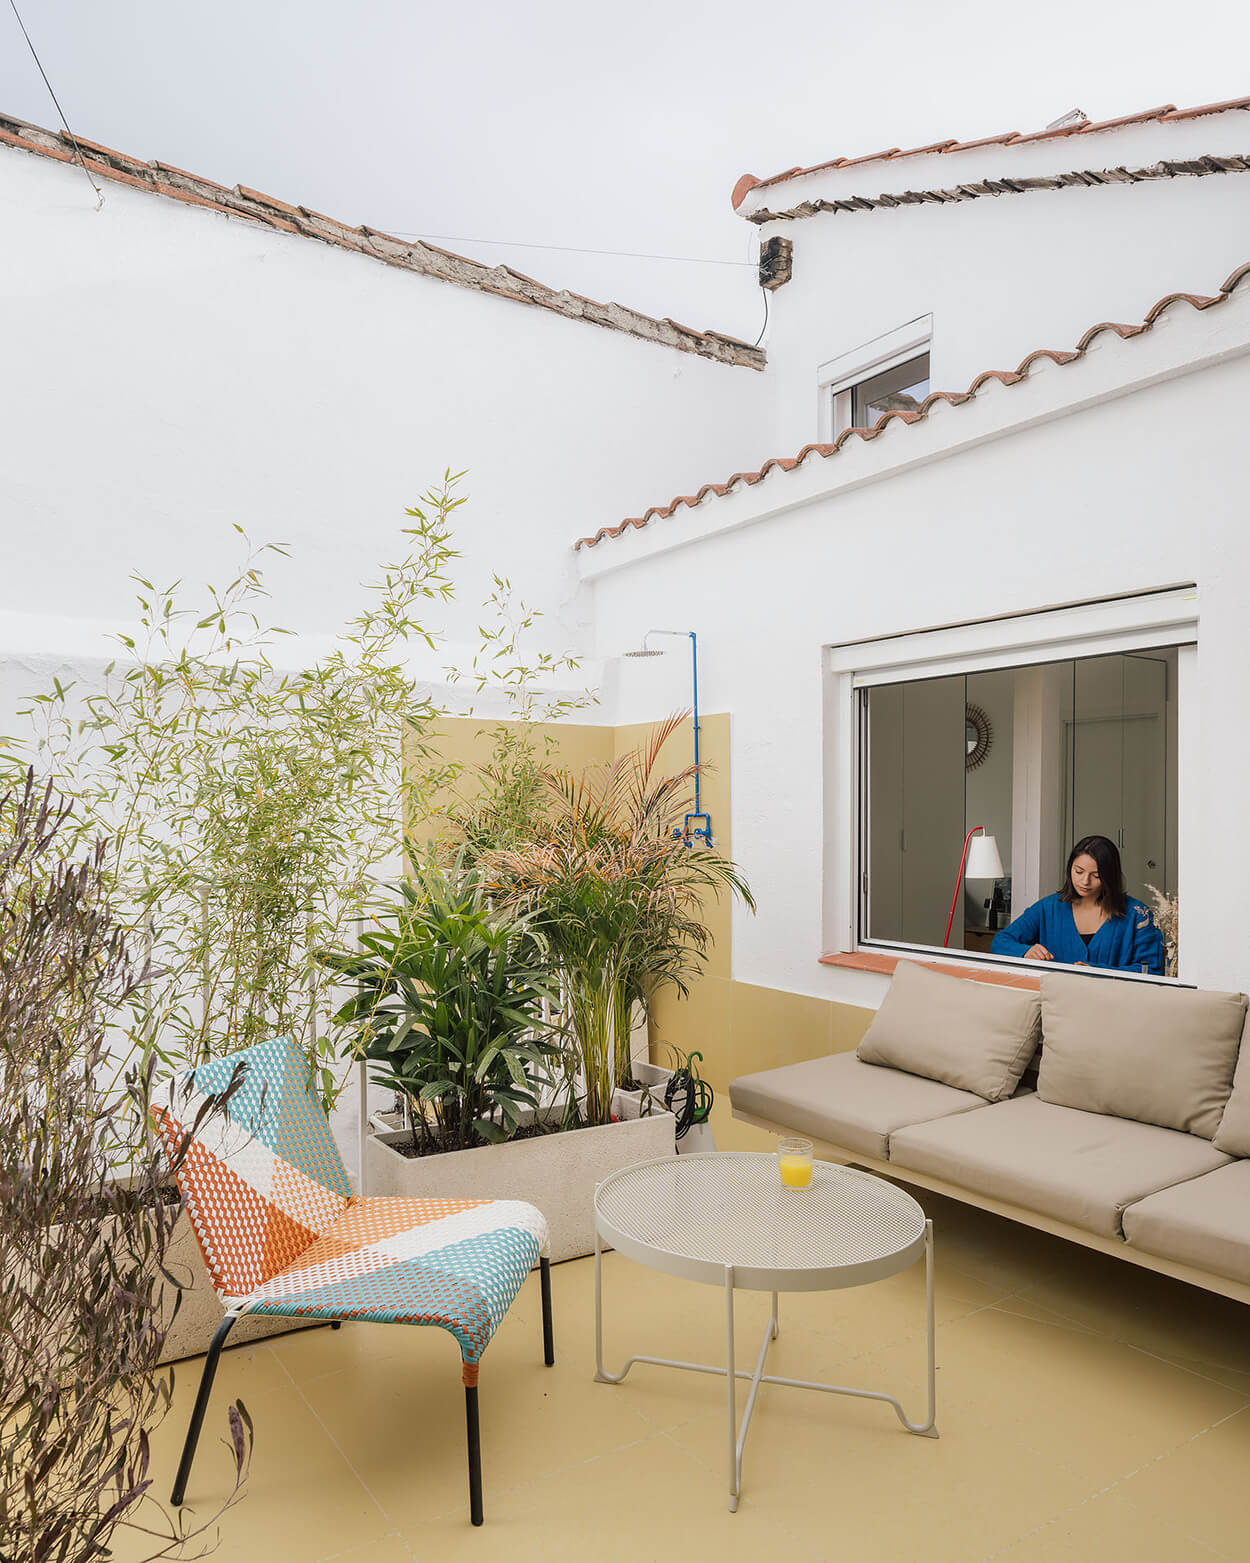 Casa_Madrid_Gon_architects_livingcorriere